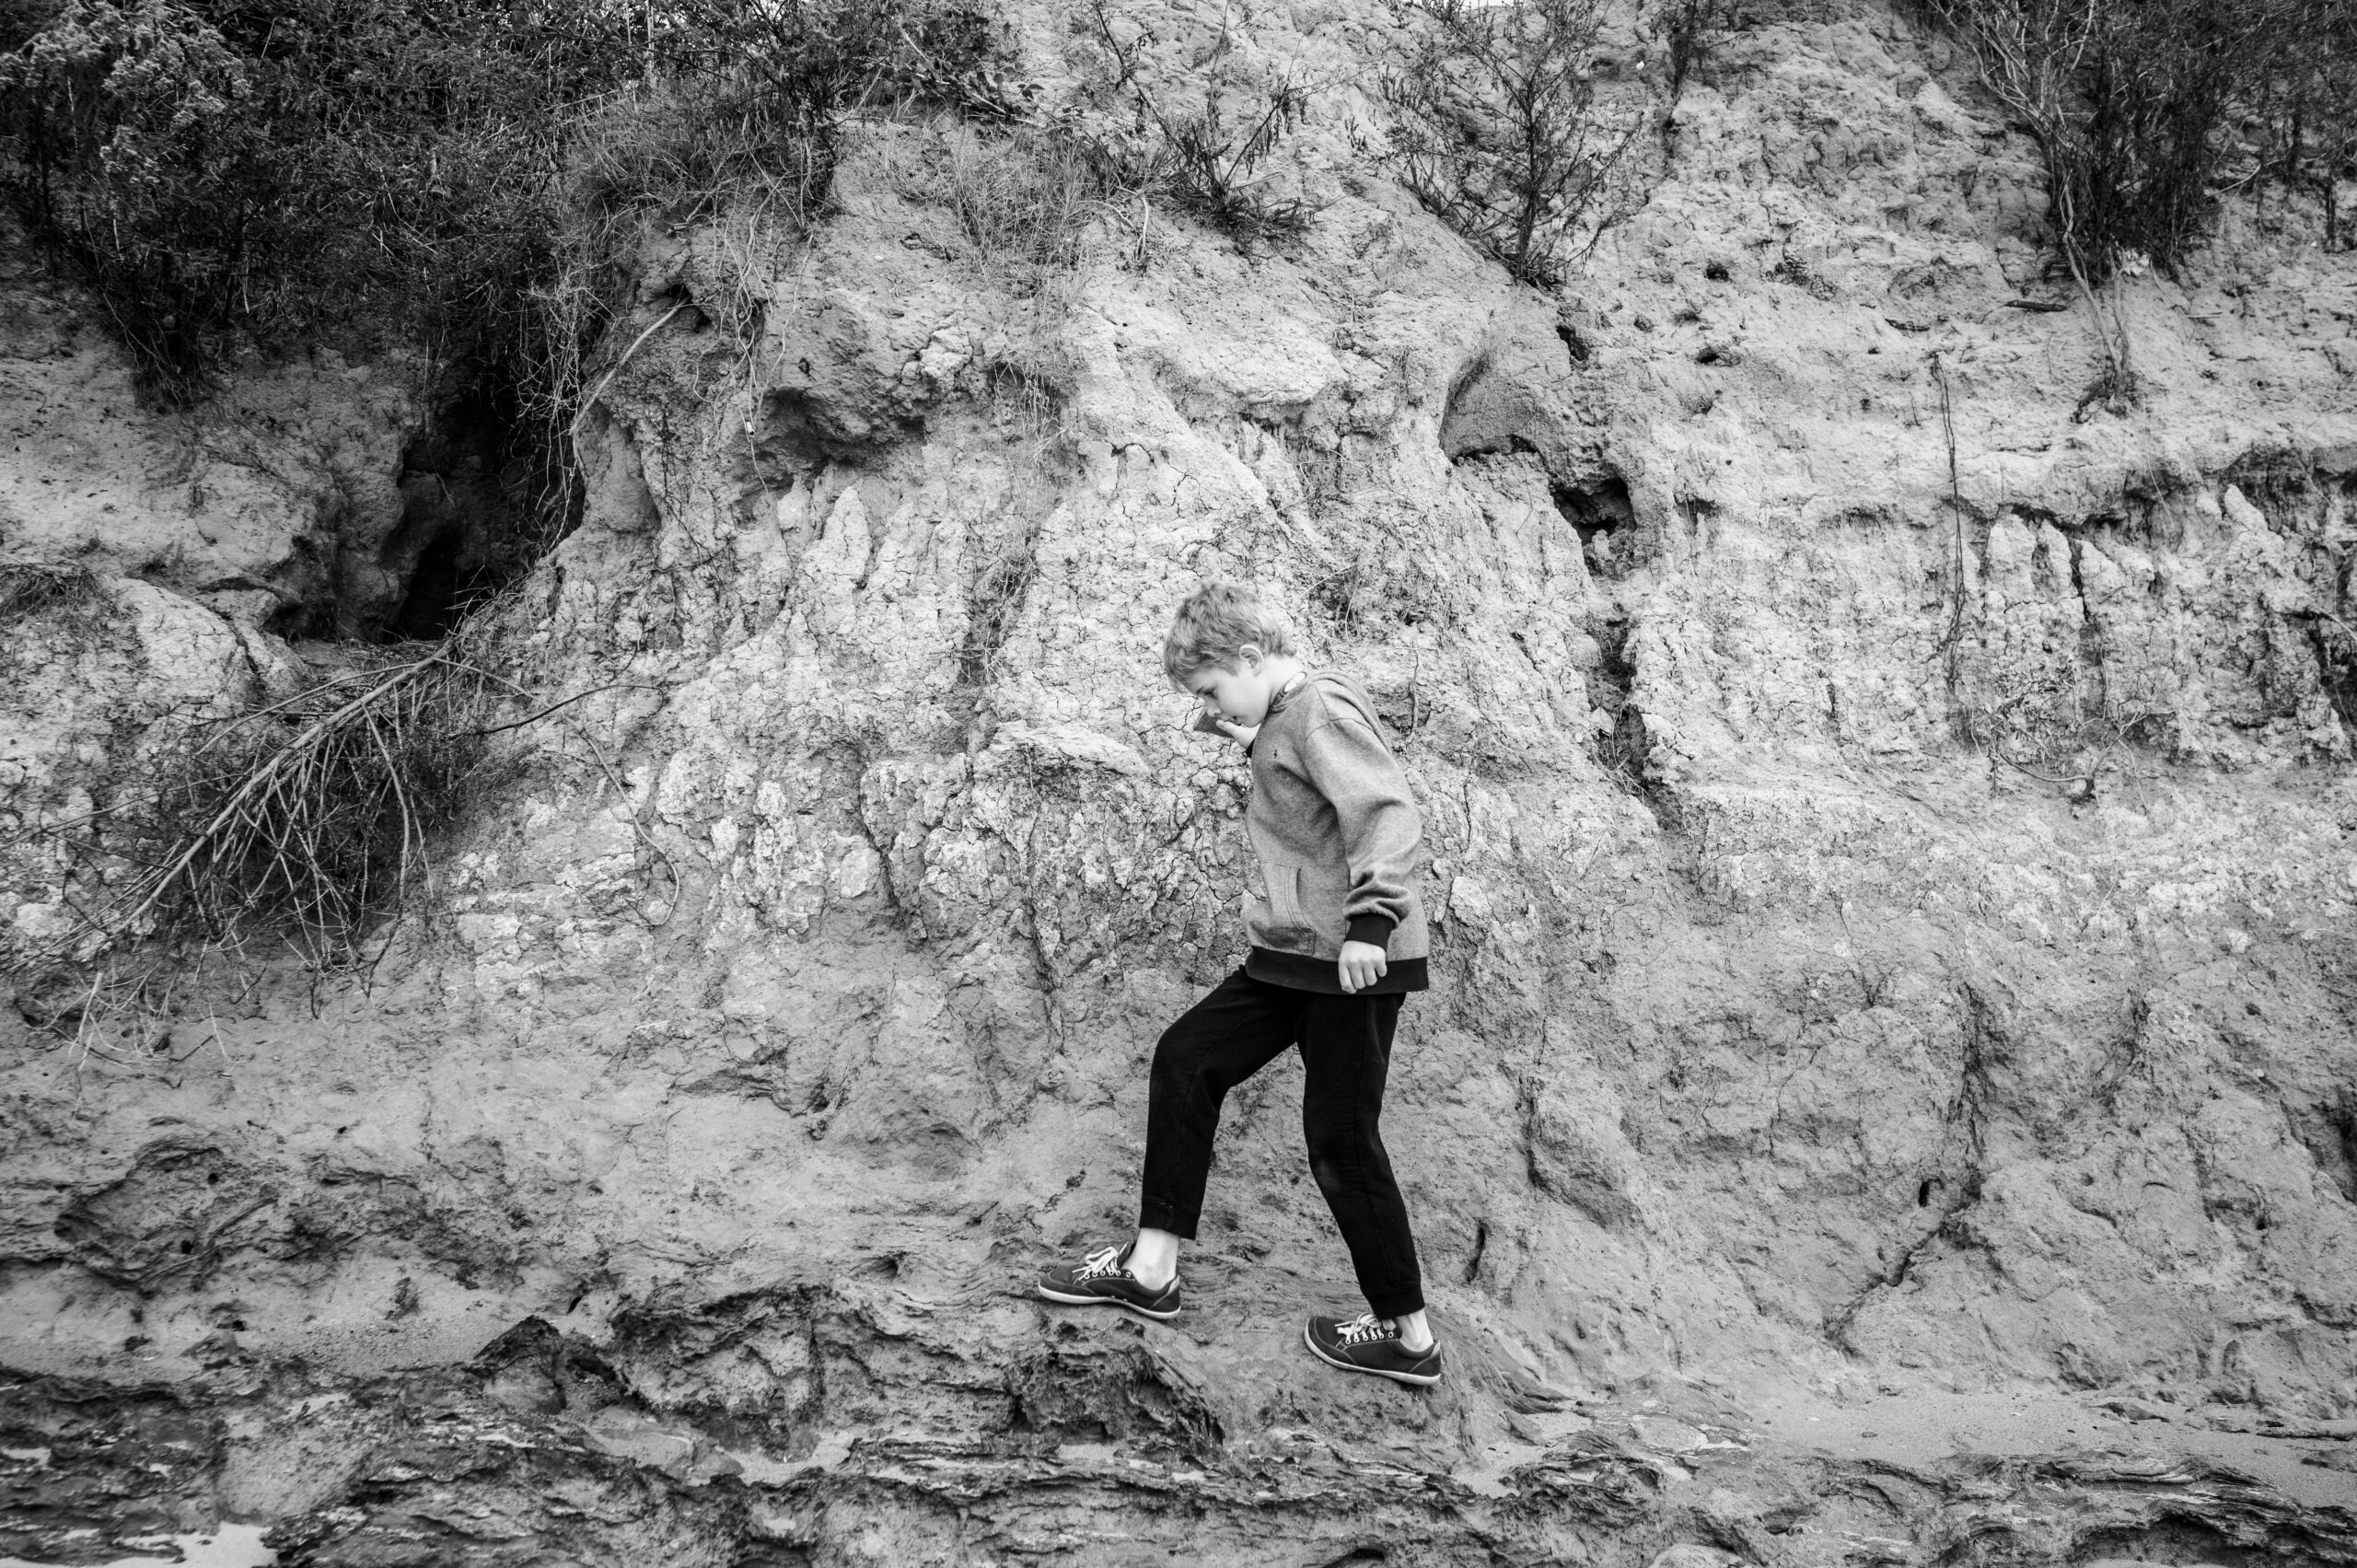 Boy explores the cliff beach near Lions Bridge in Newport News.